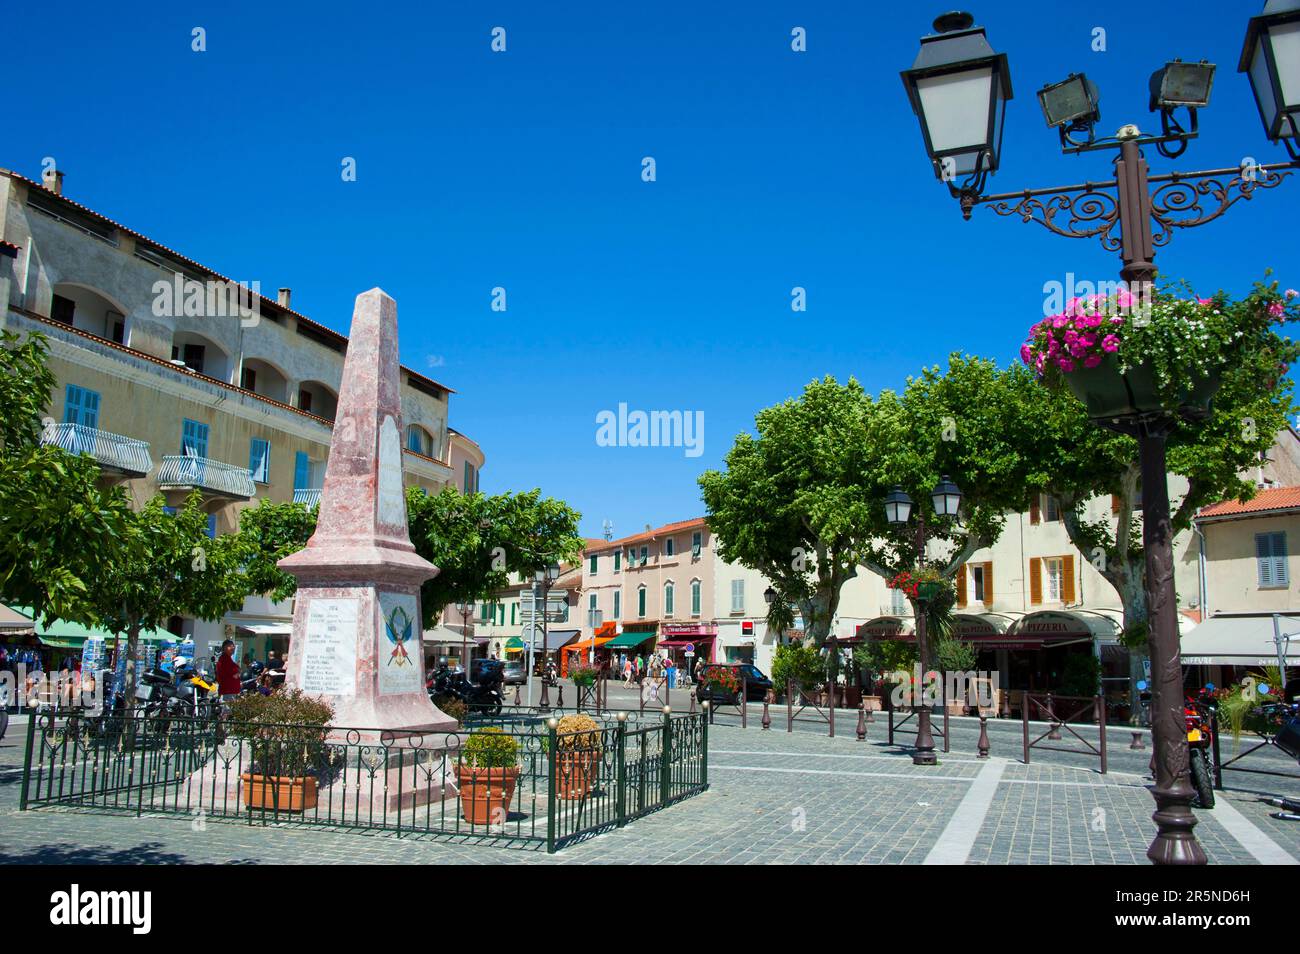 War Memorial, Saint, St.-Florent, Corsica, France Stock Photo